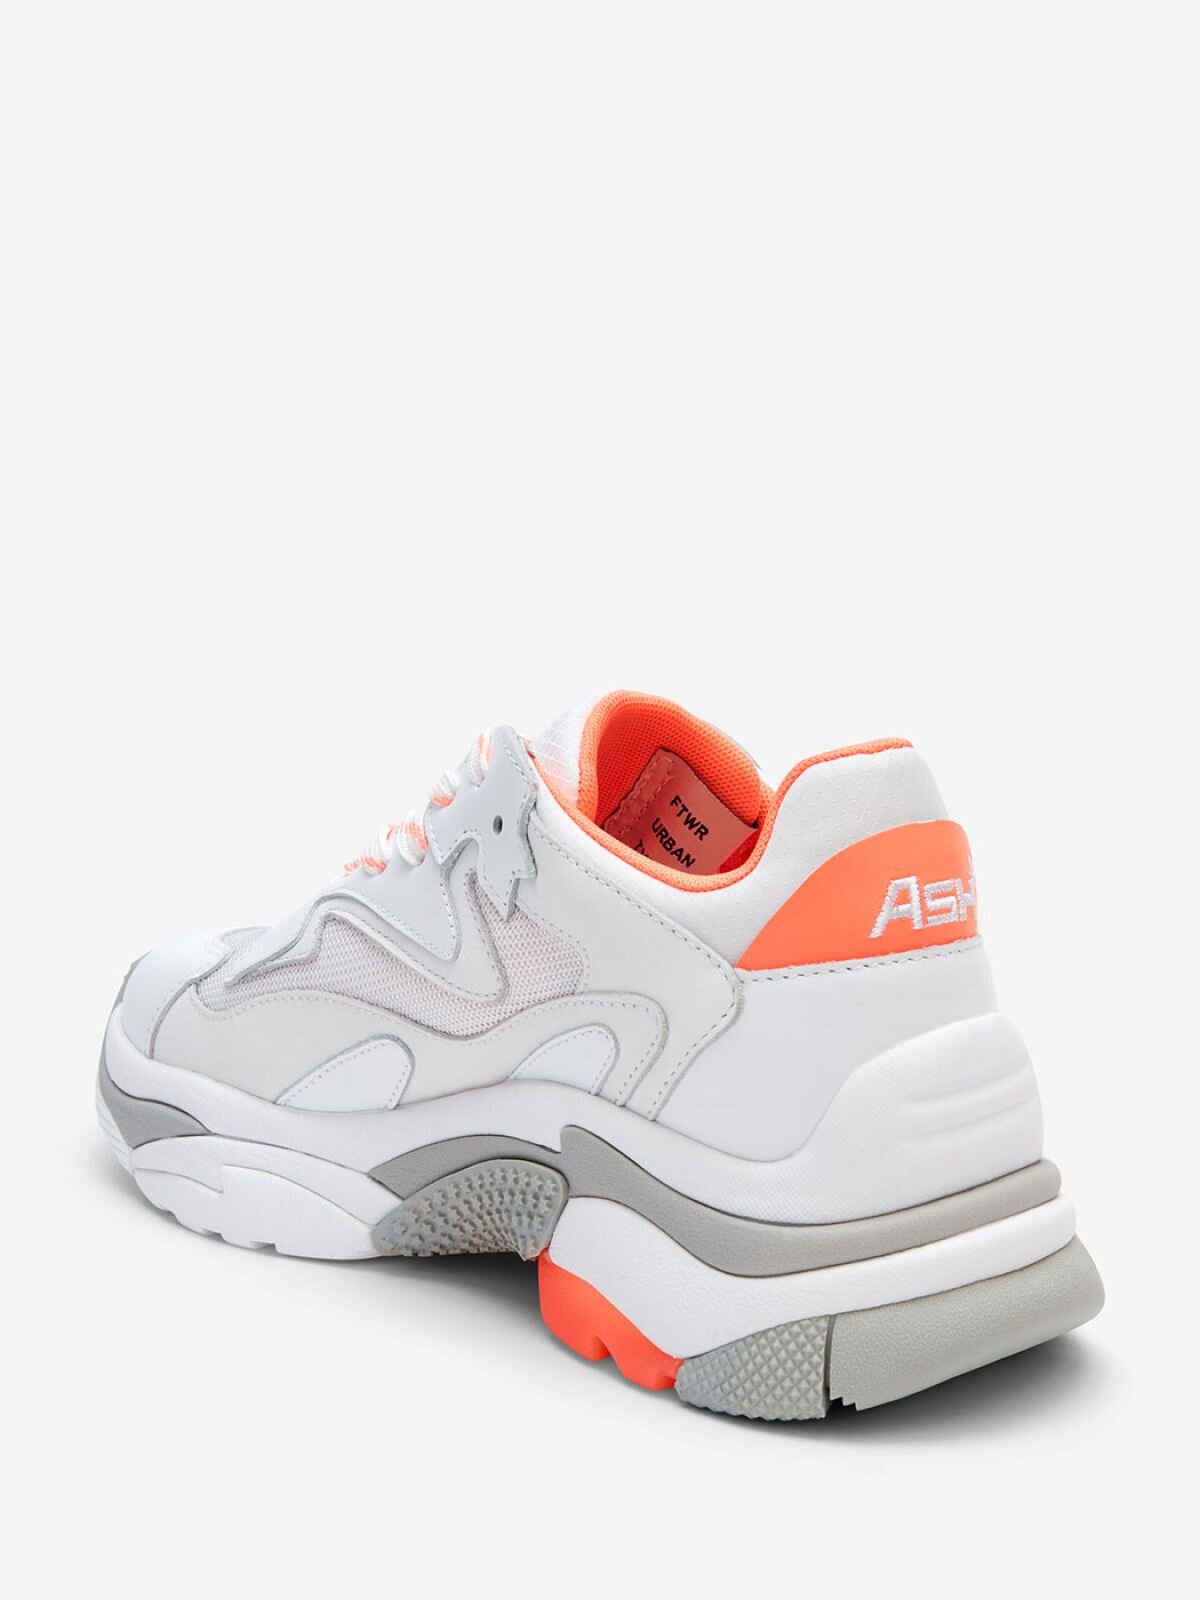 Update 205+ ash addict sneakers white latest